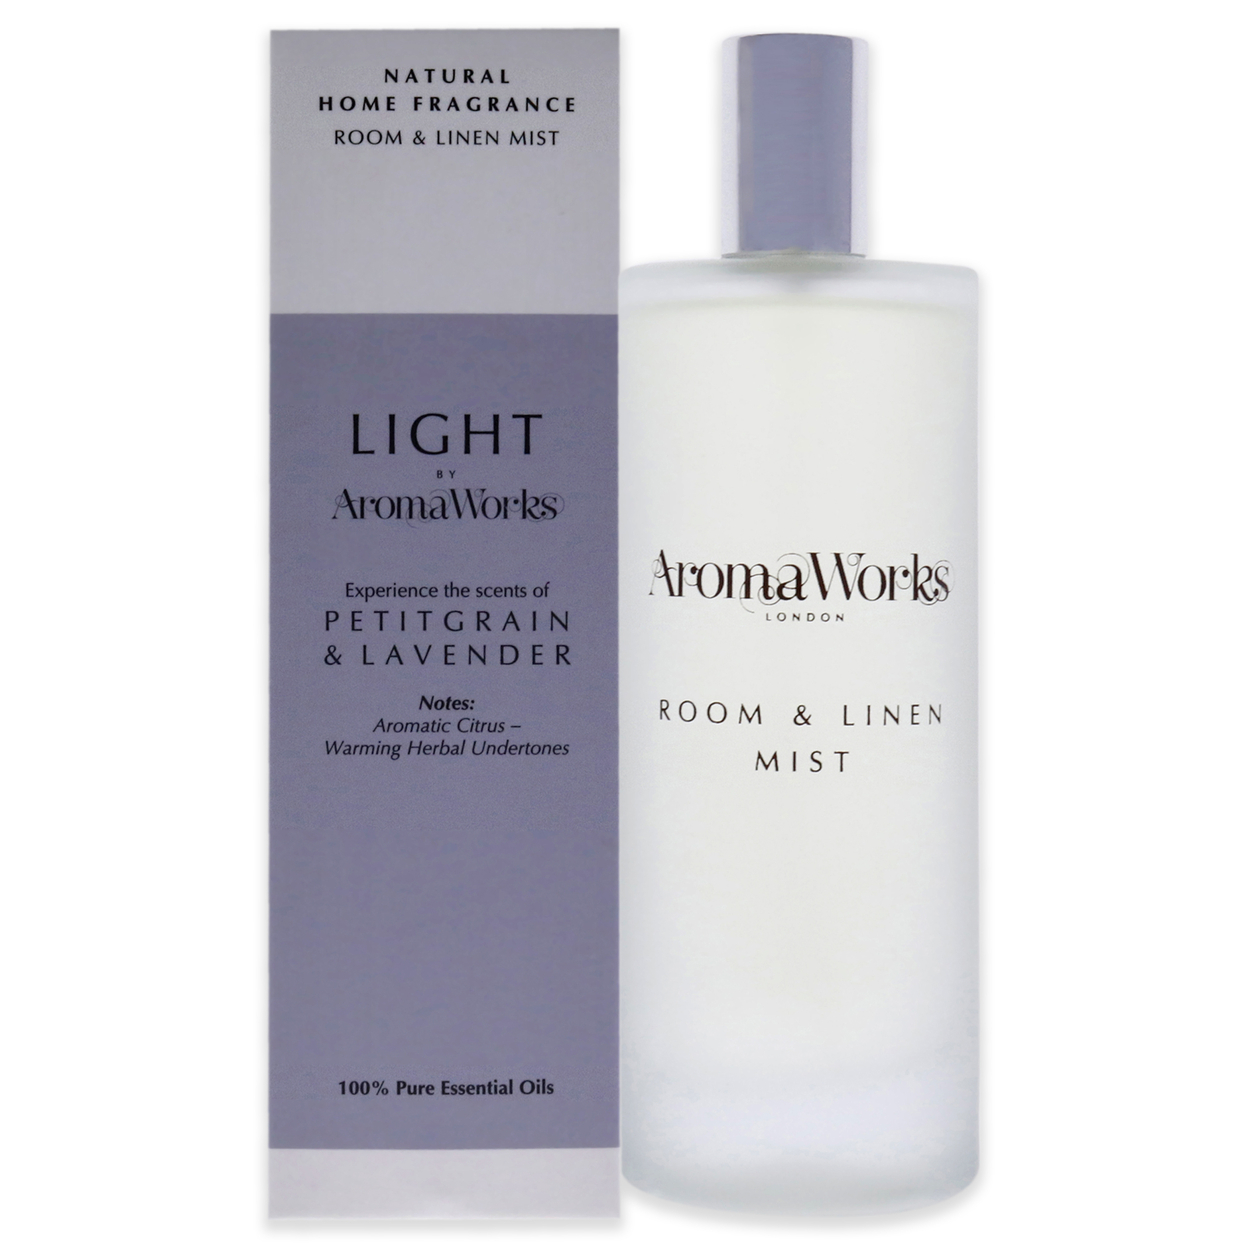 Aromaworks Light Room And Linen Mist - Petitgrain And Lavender Room Spray 3.4 Oz